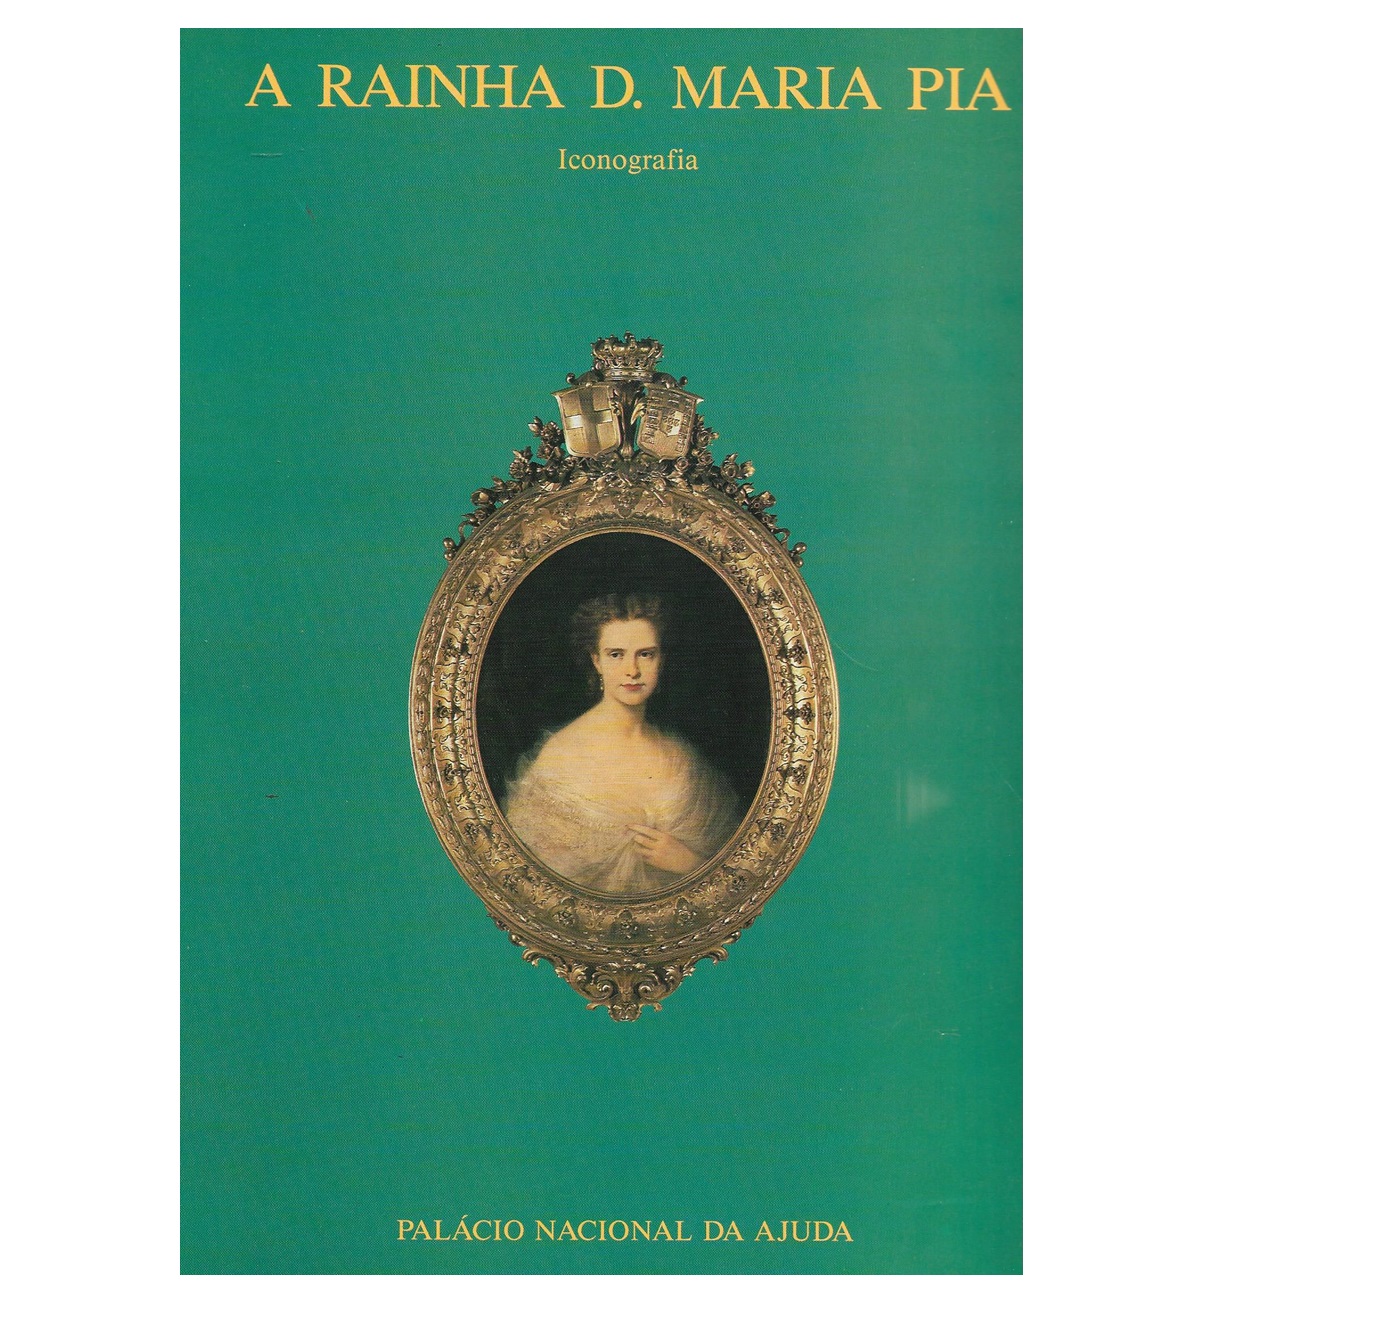 A RAINHA D. MARIA PIA: ICONOGRAFIA.